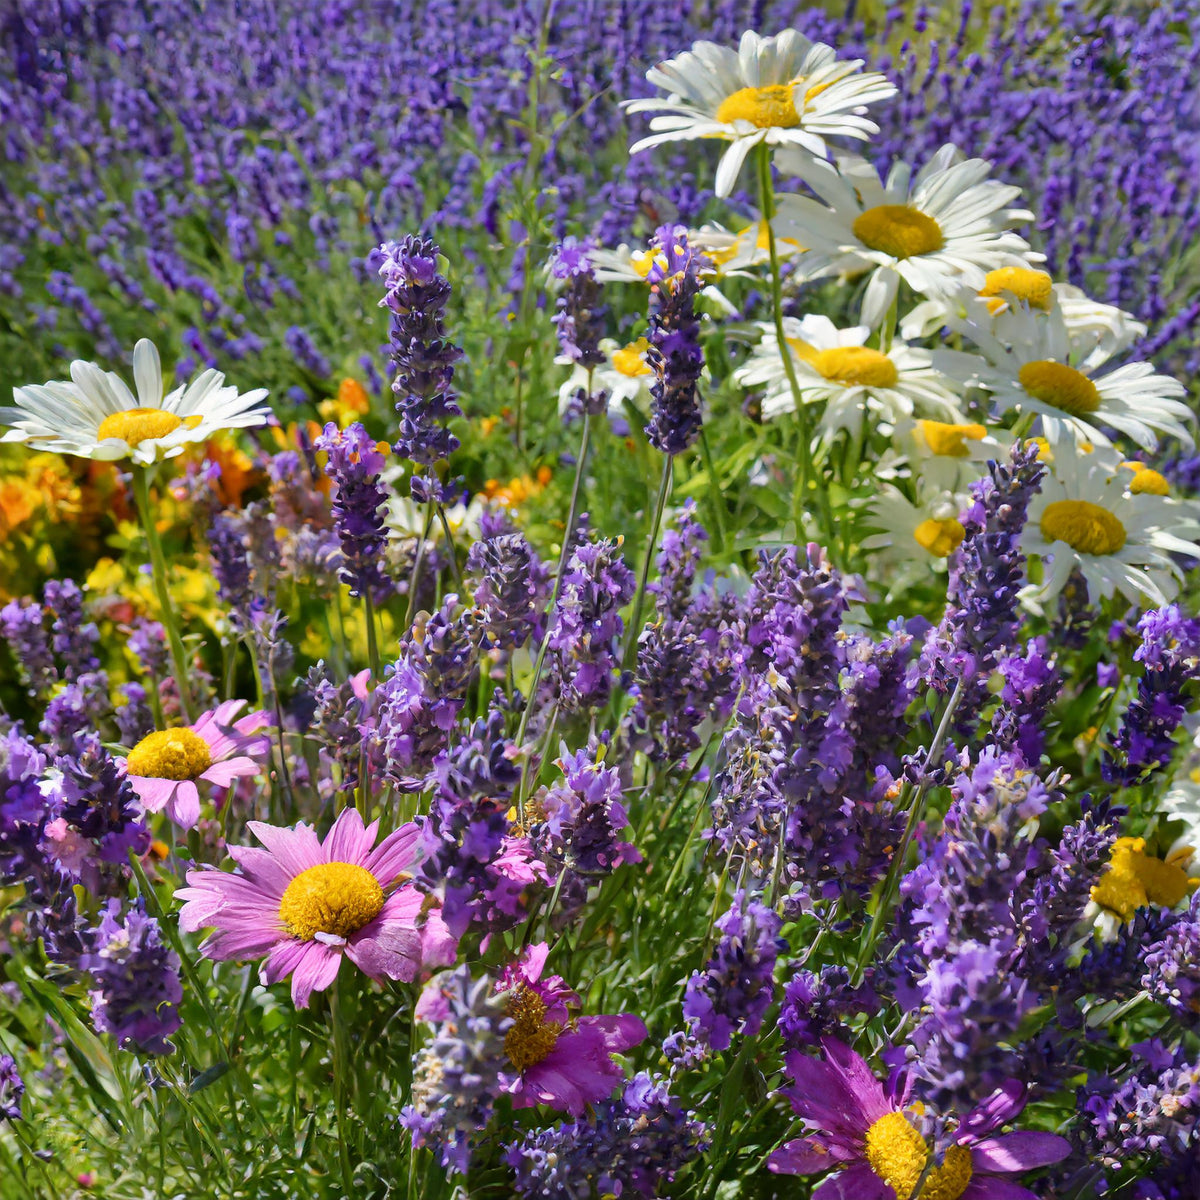 Companion Plants to Lavender